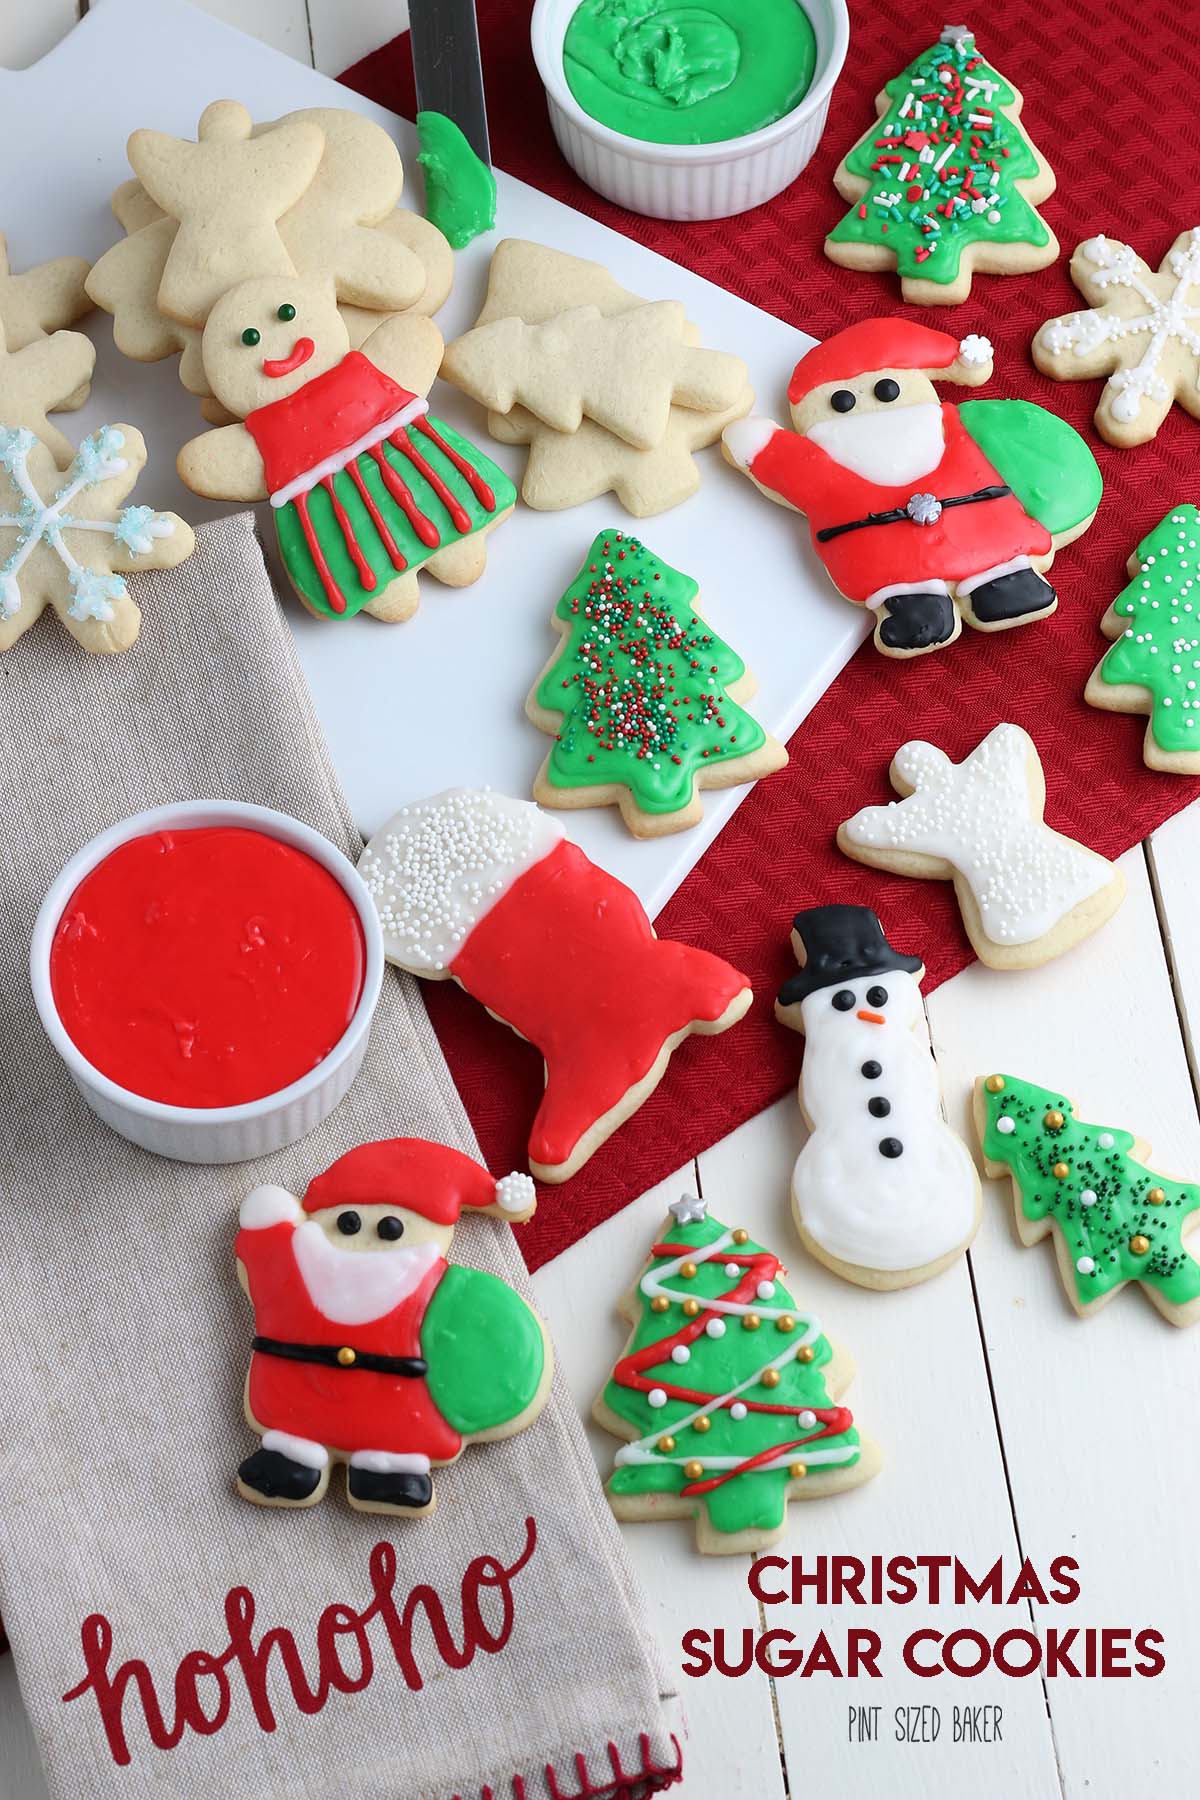 https://pintsizedbaker.com/wp-content/uploads/2020/12/Christmas-Sugar-Cookies.jpg